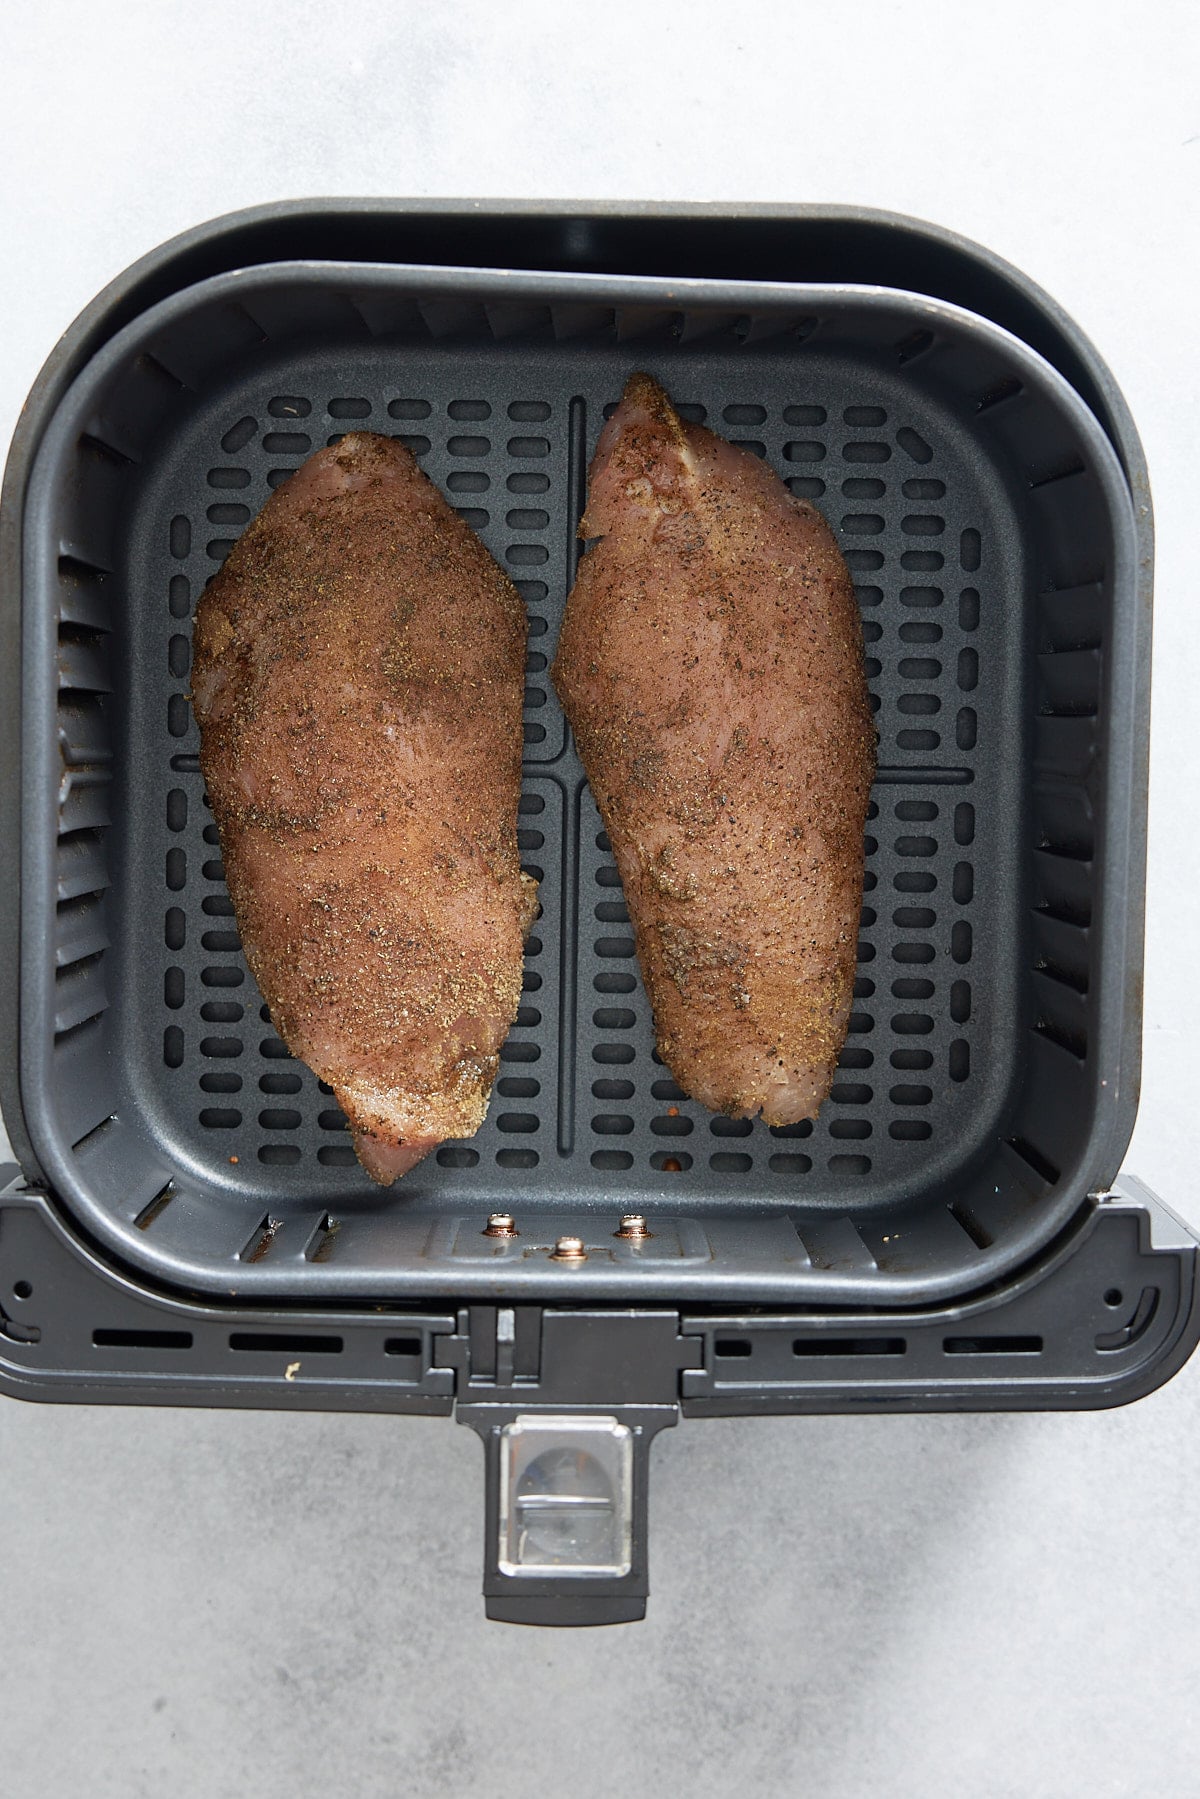 Uncooked, seasoned turkey tenderloins set into air fryer basket